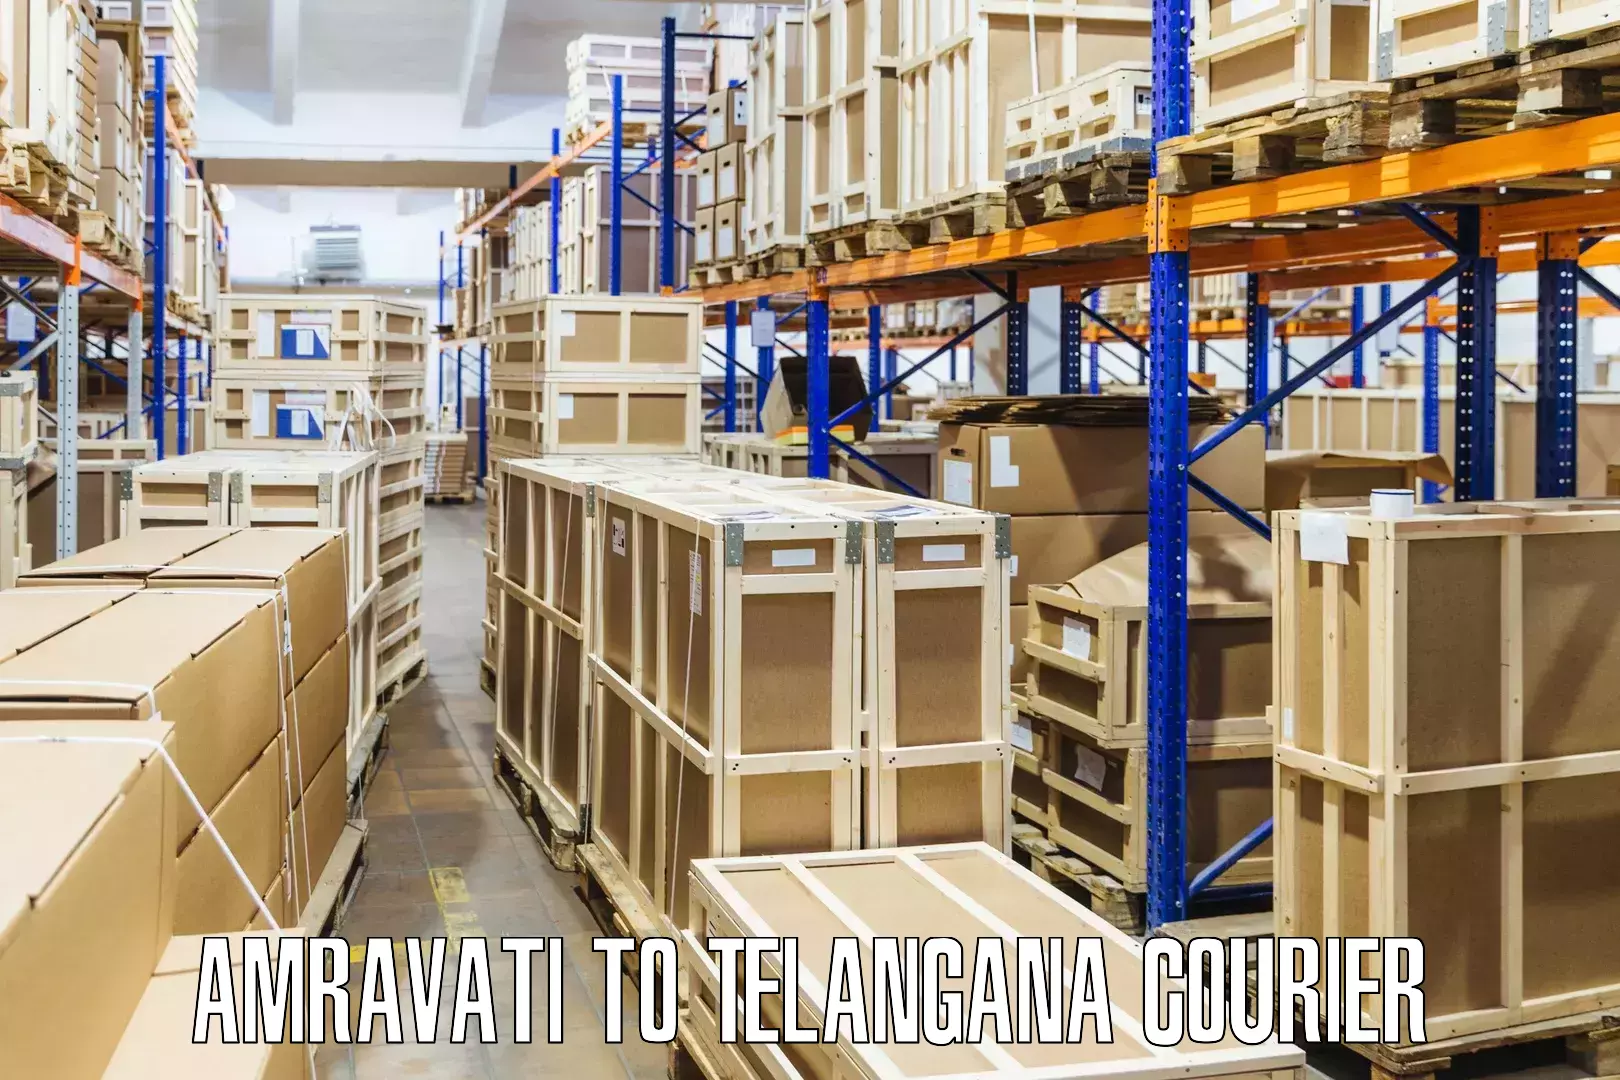 Courier service comparison Amravati to Manuguru